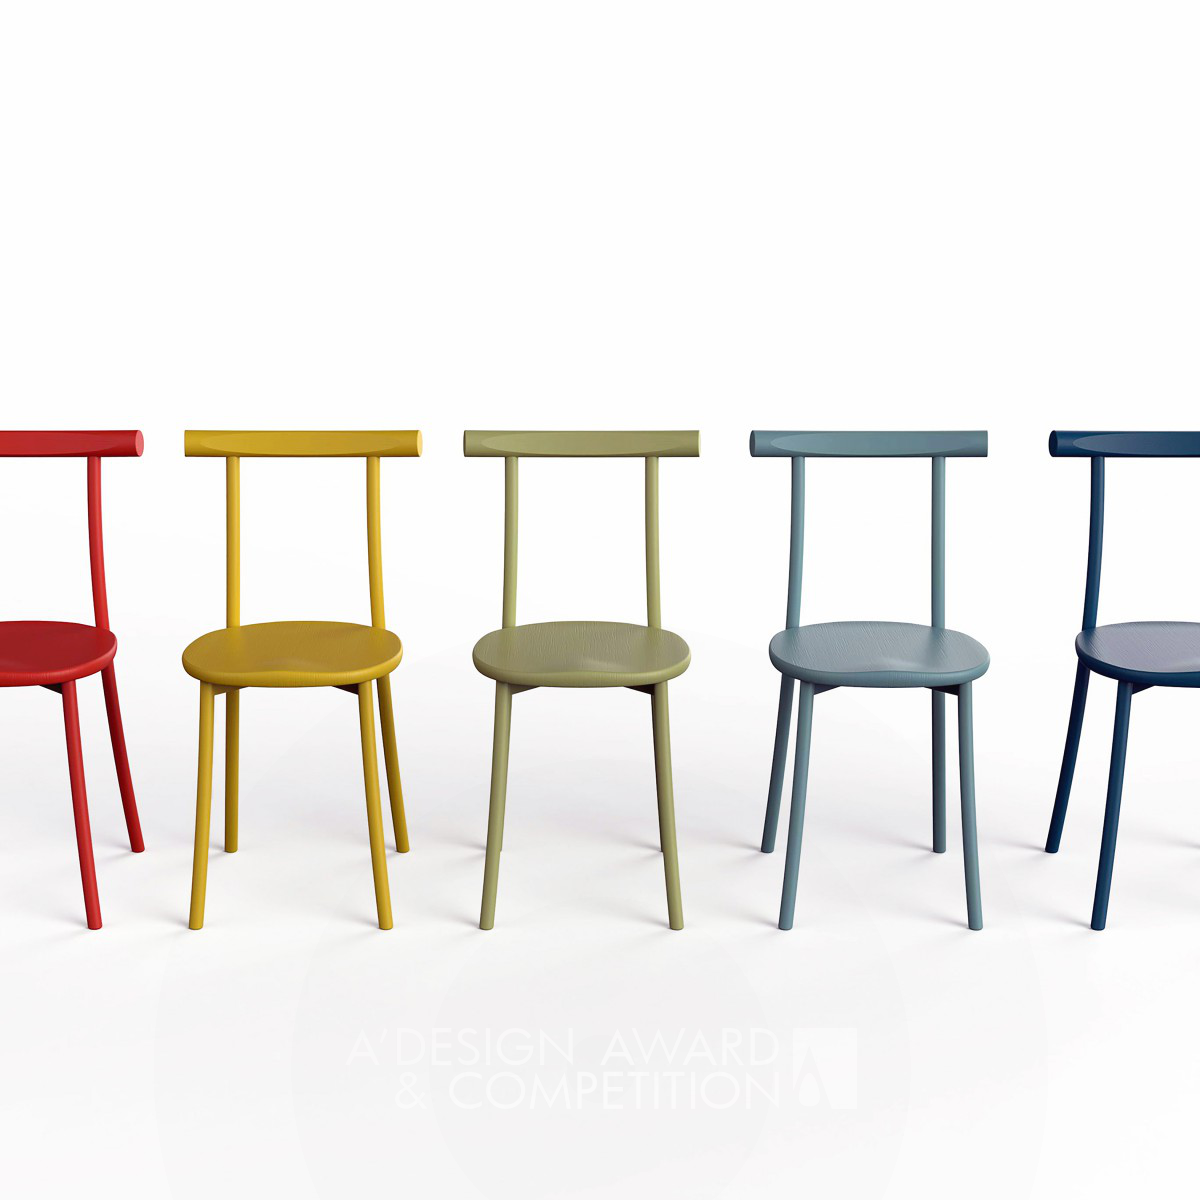 Midori Chair by MrSmith Studio